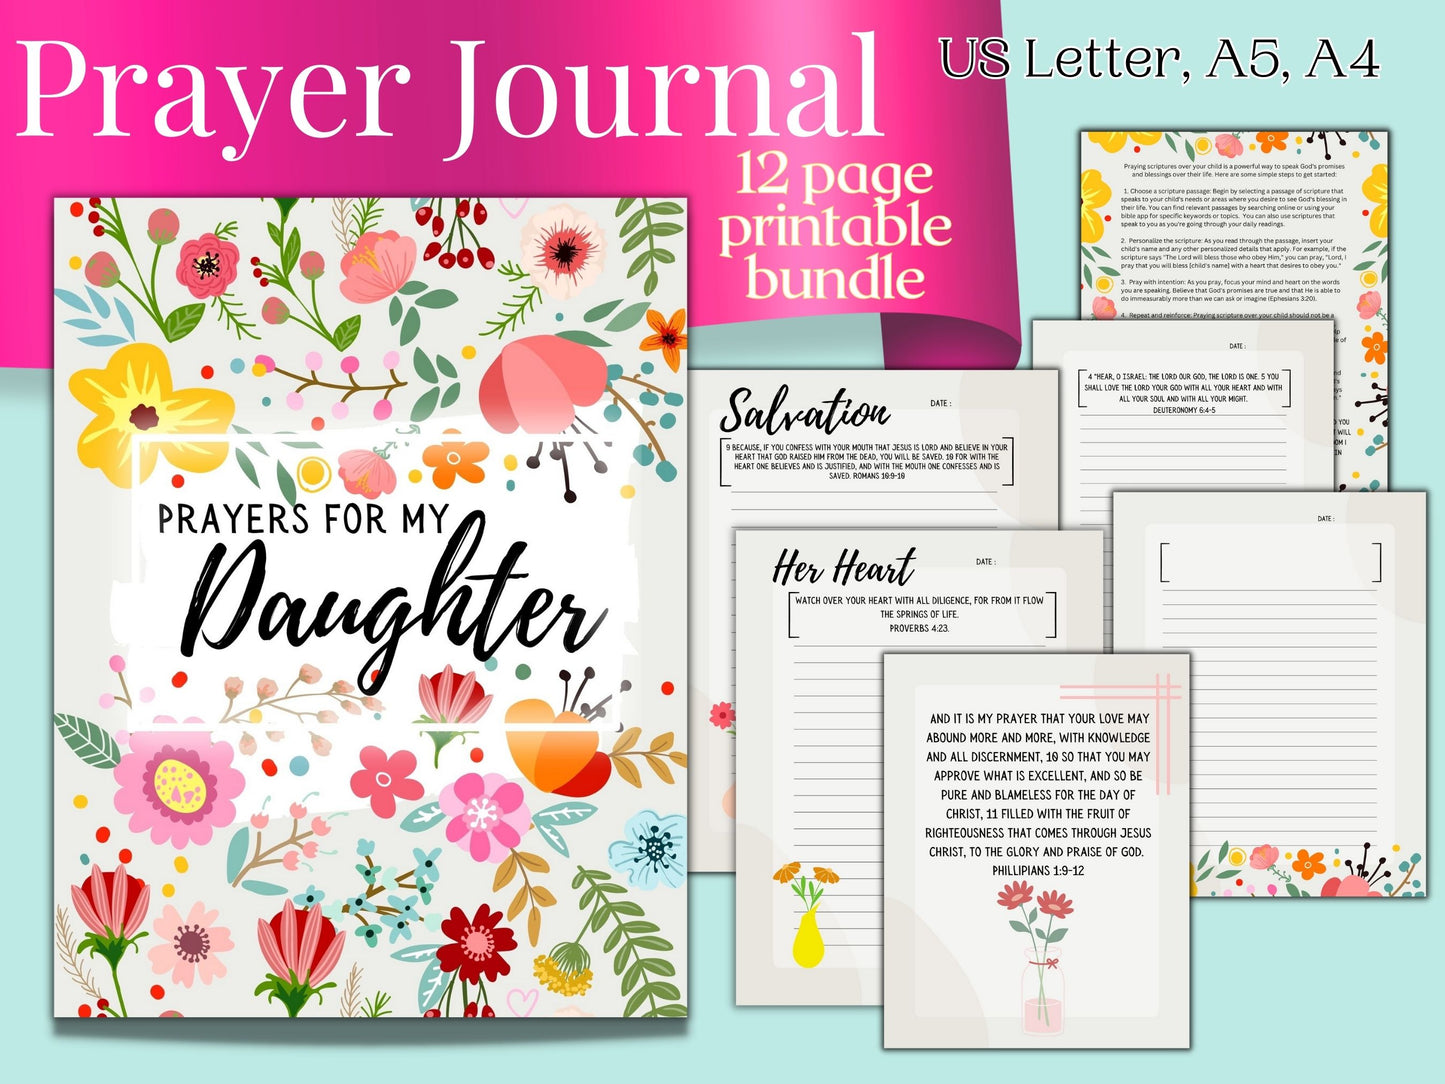 Prayer Journal: Daughter Edition